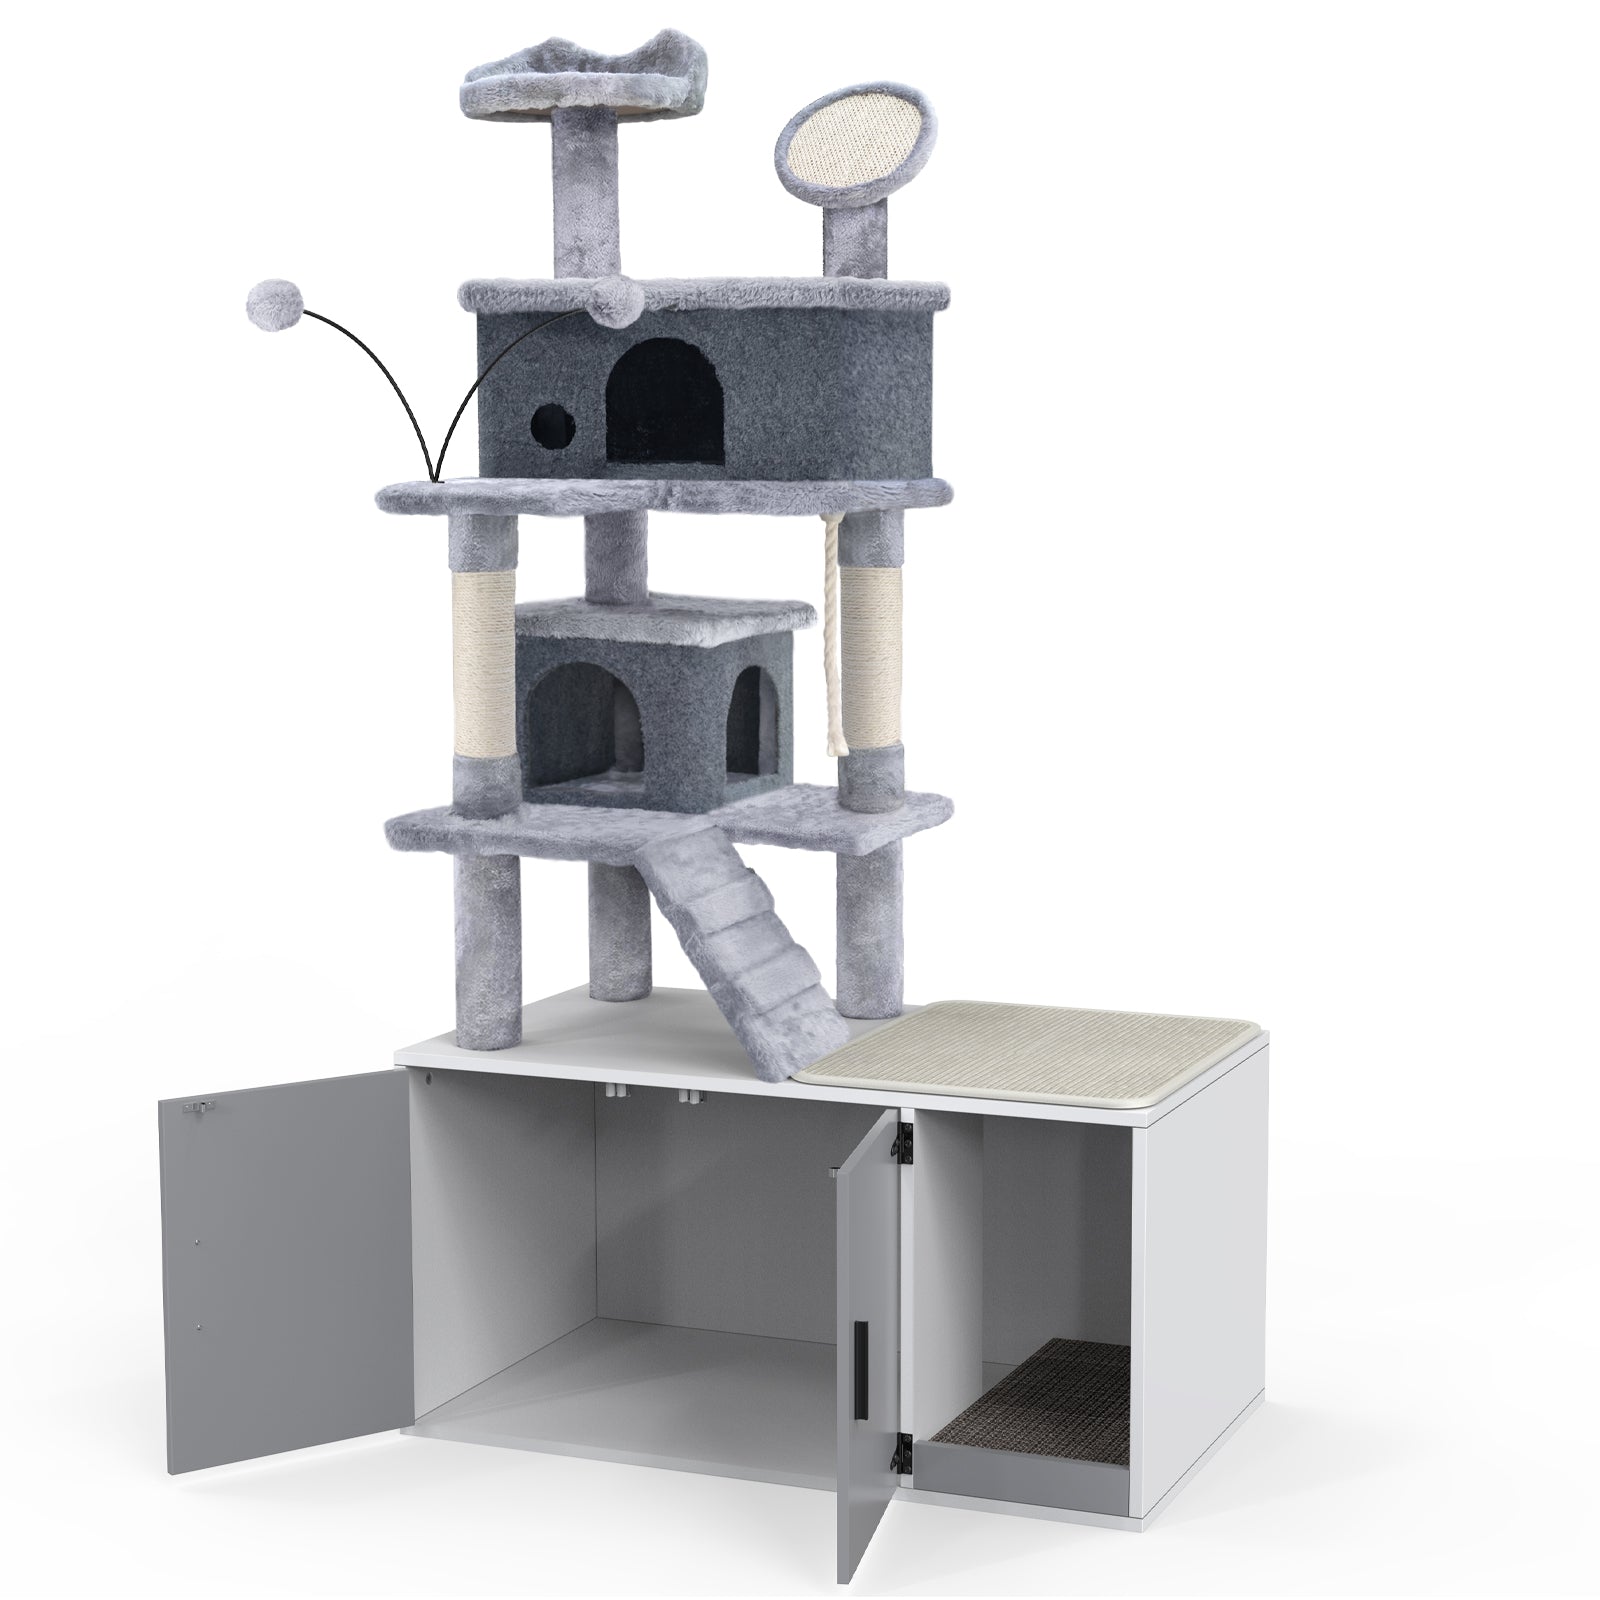 GDLF Cat Litter Box Enclosure Hidden Washroom Tower All-In-One Tree Condo， Grey